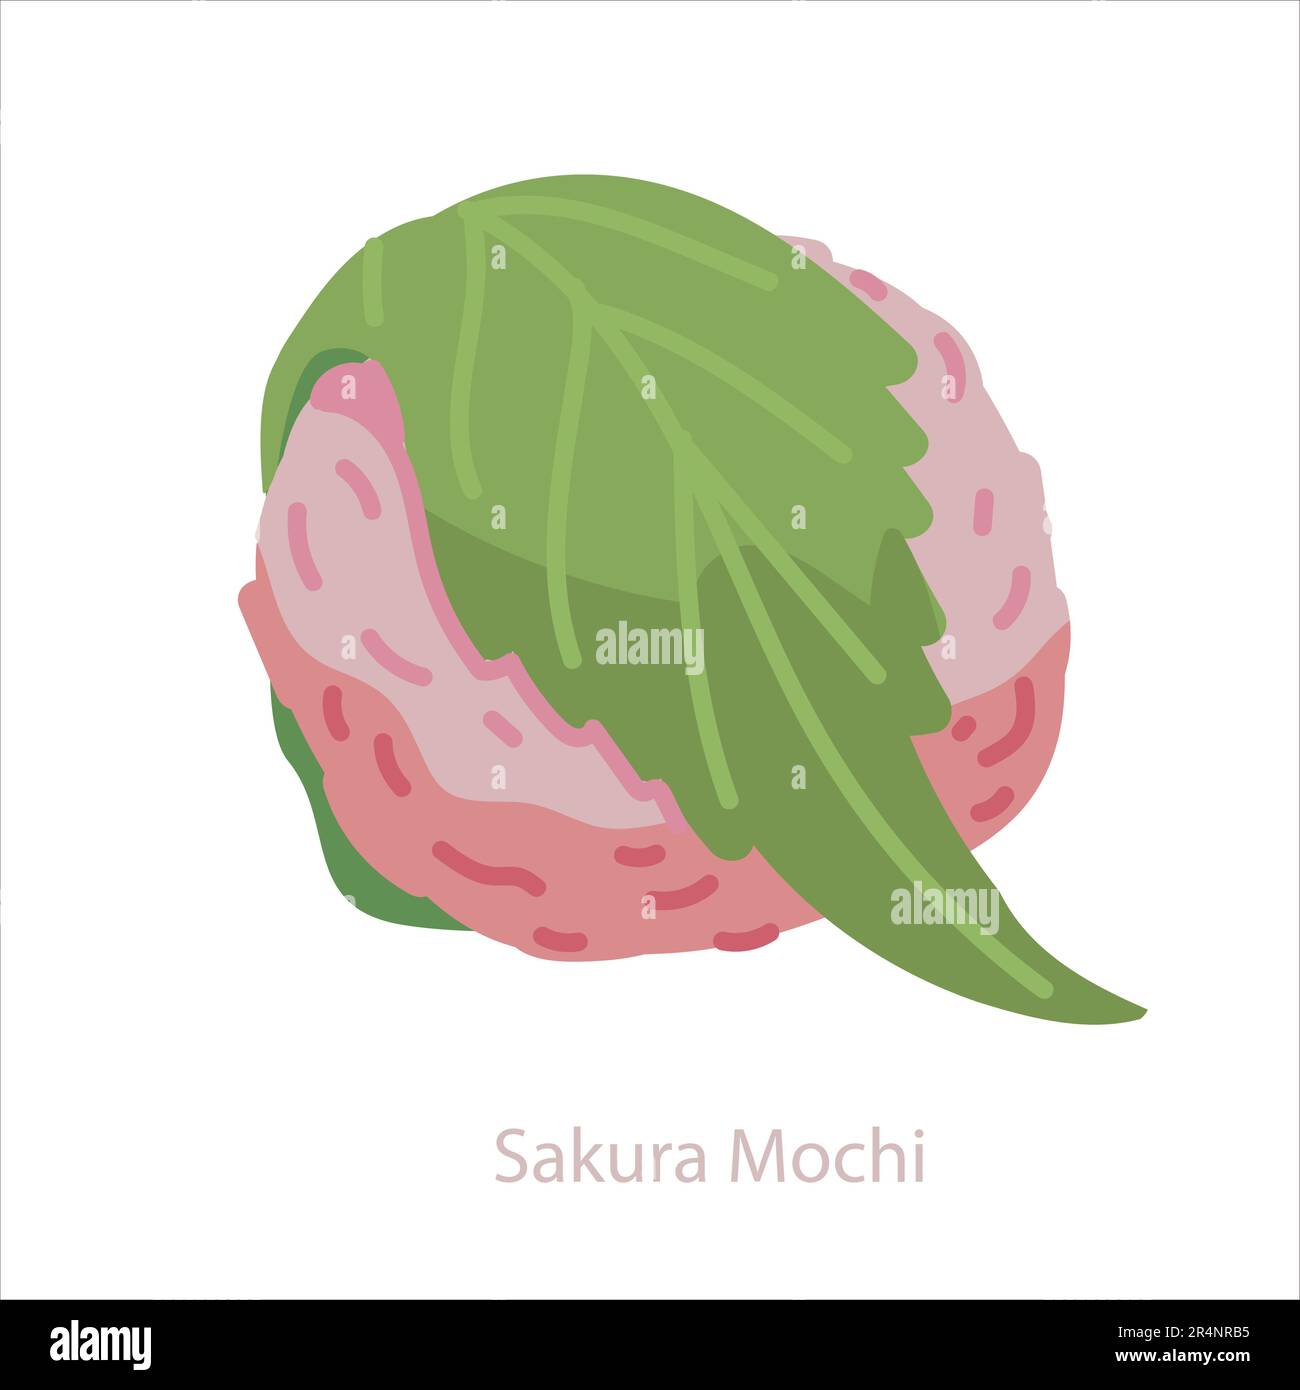 Sakura mochi. Klebriger Reis traditionelles japanisches süßes Gebäck, verpackt in grünes Sakurablatt. Vektorgrafik isoliert auf Weiß Stock Vektor